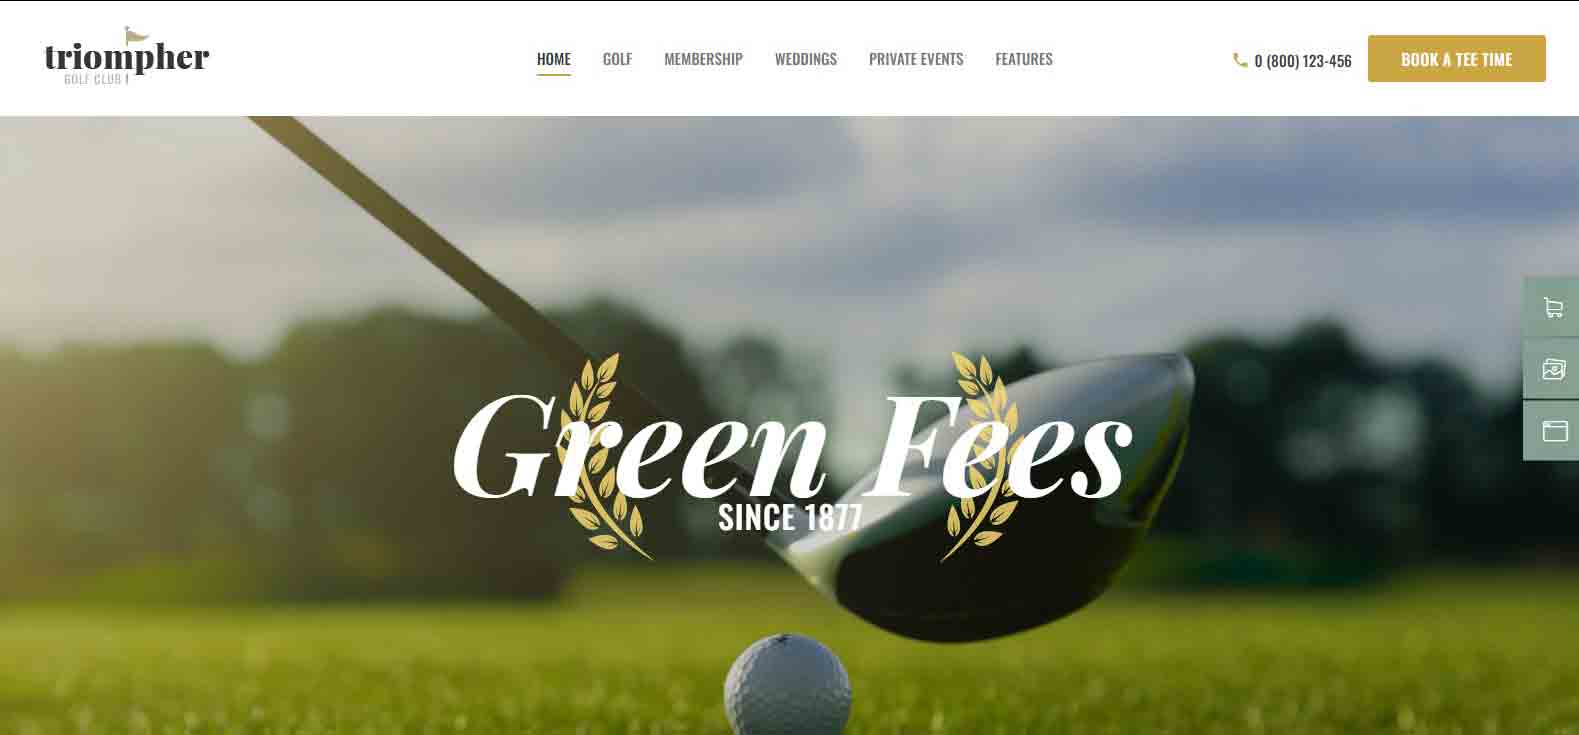 Triompher-Golf-Course-&-Sports-Club-WordPress-Theme